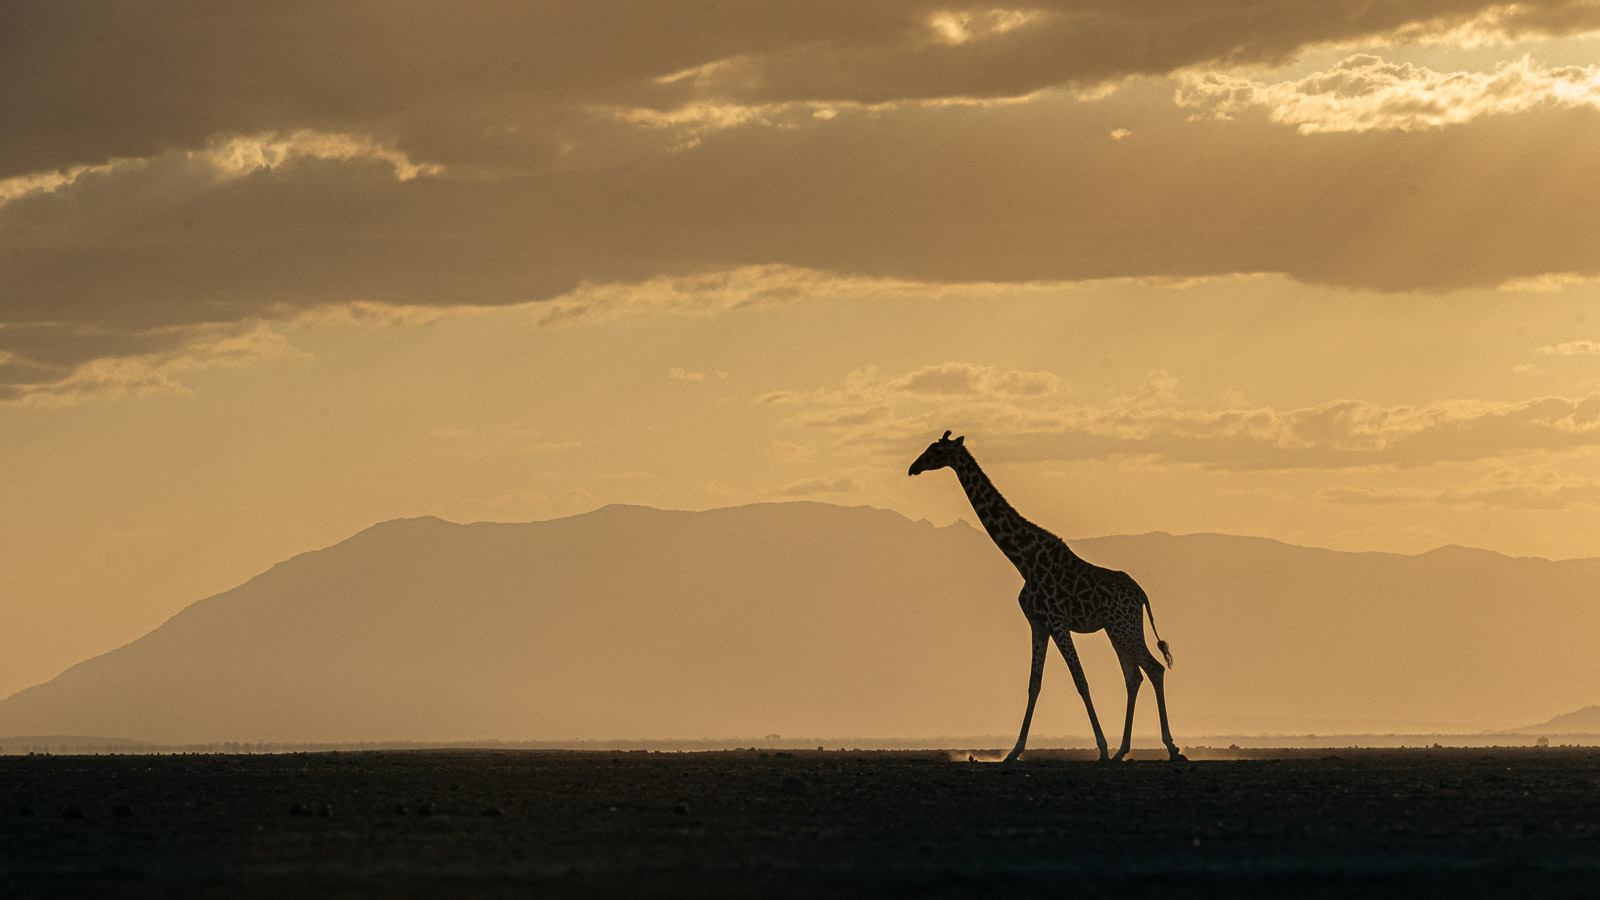 Sunset with giraffe...